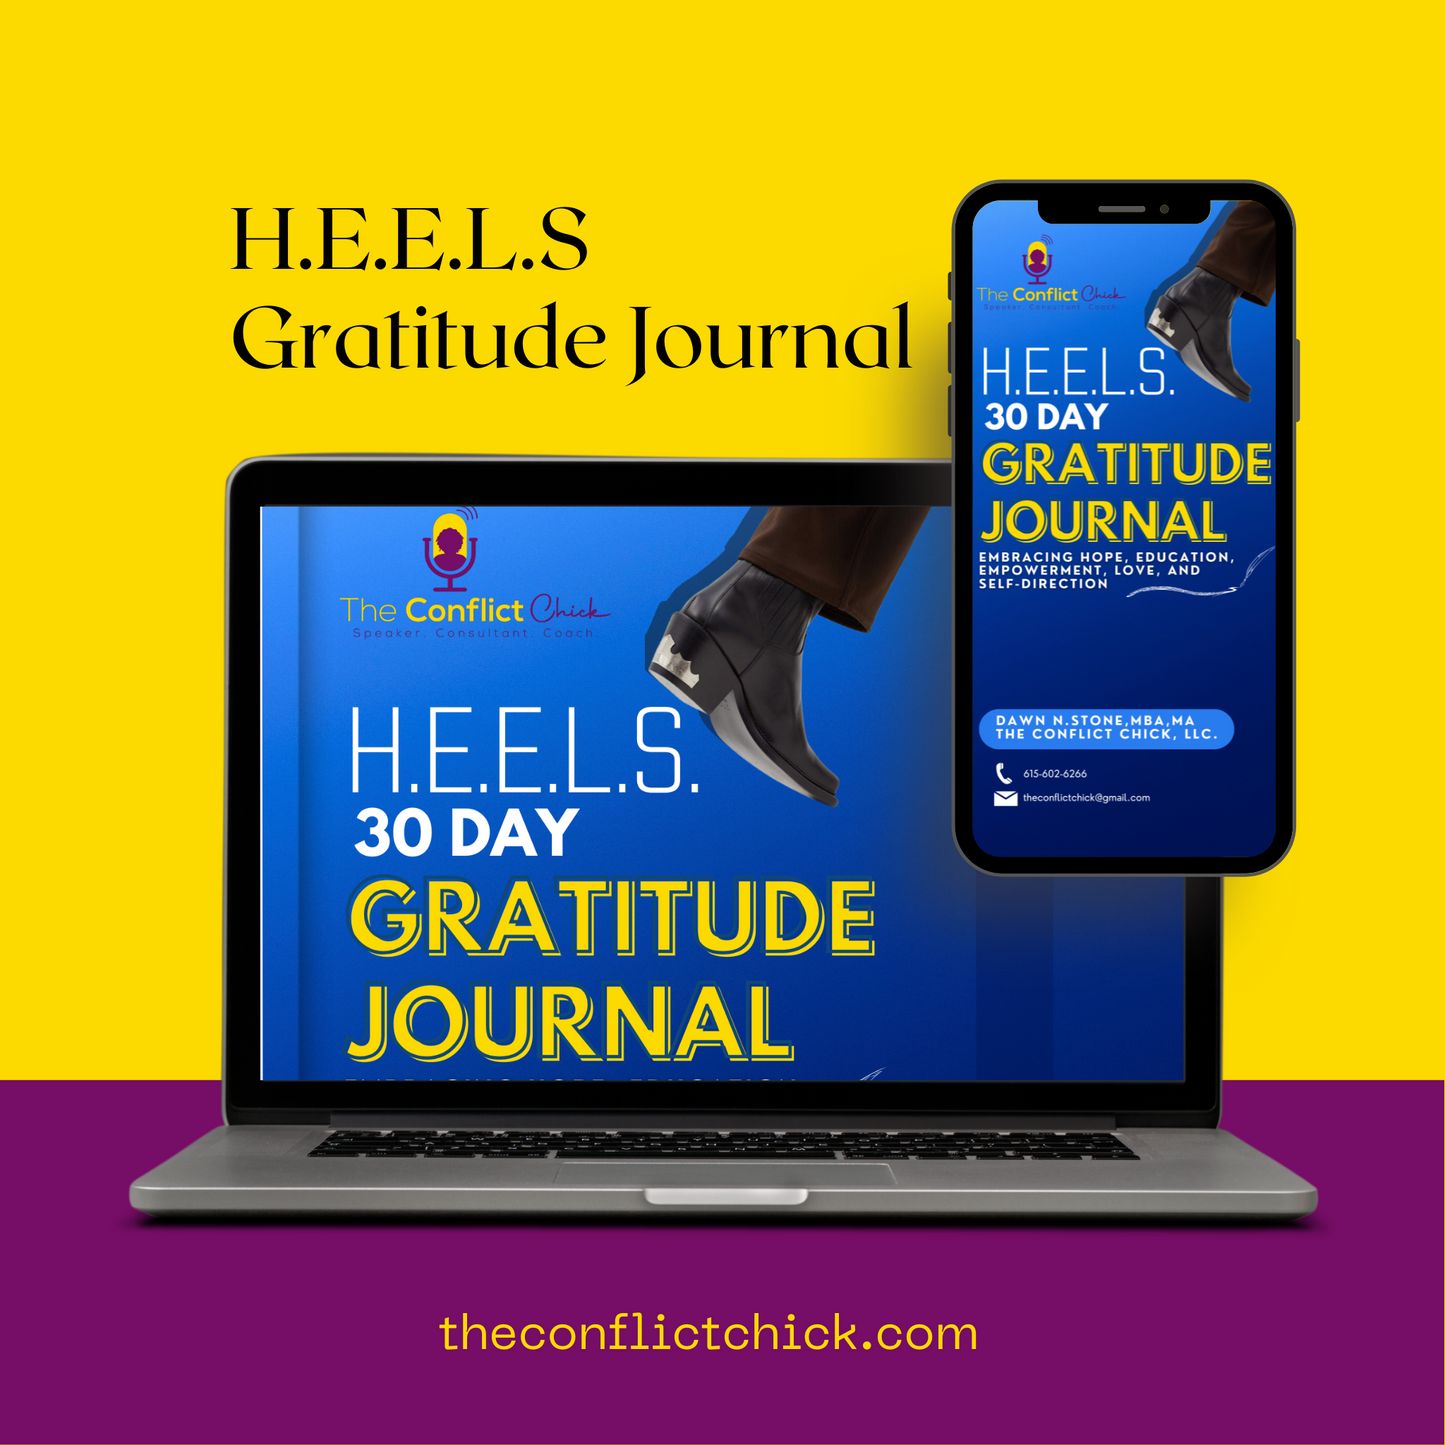 H.E.E.L.S Gratitude Journal